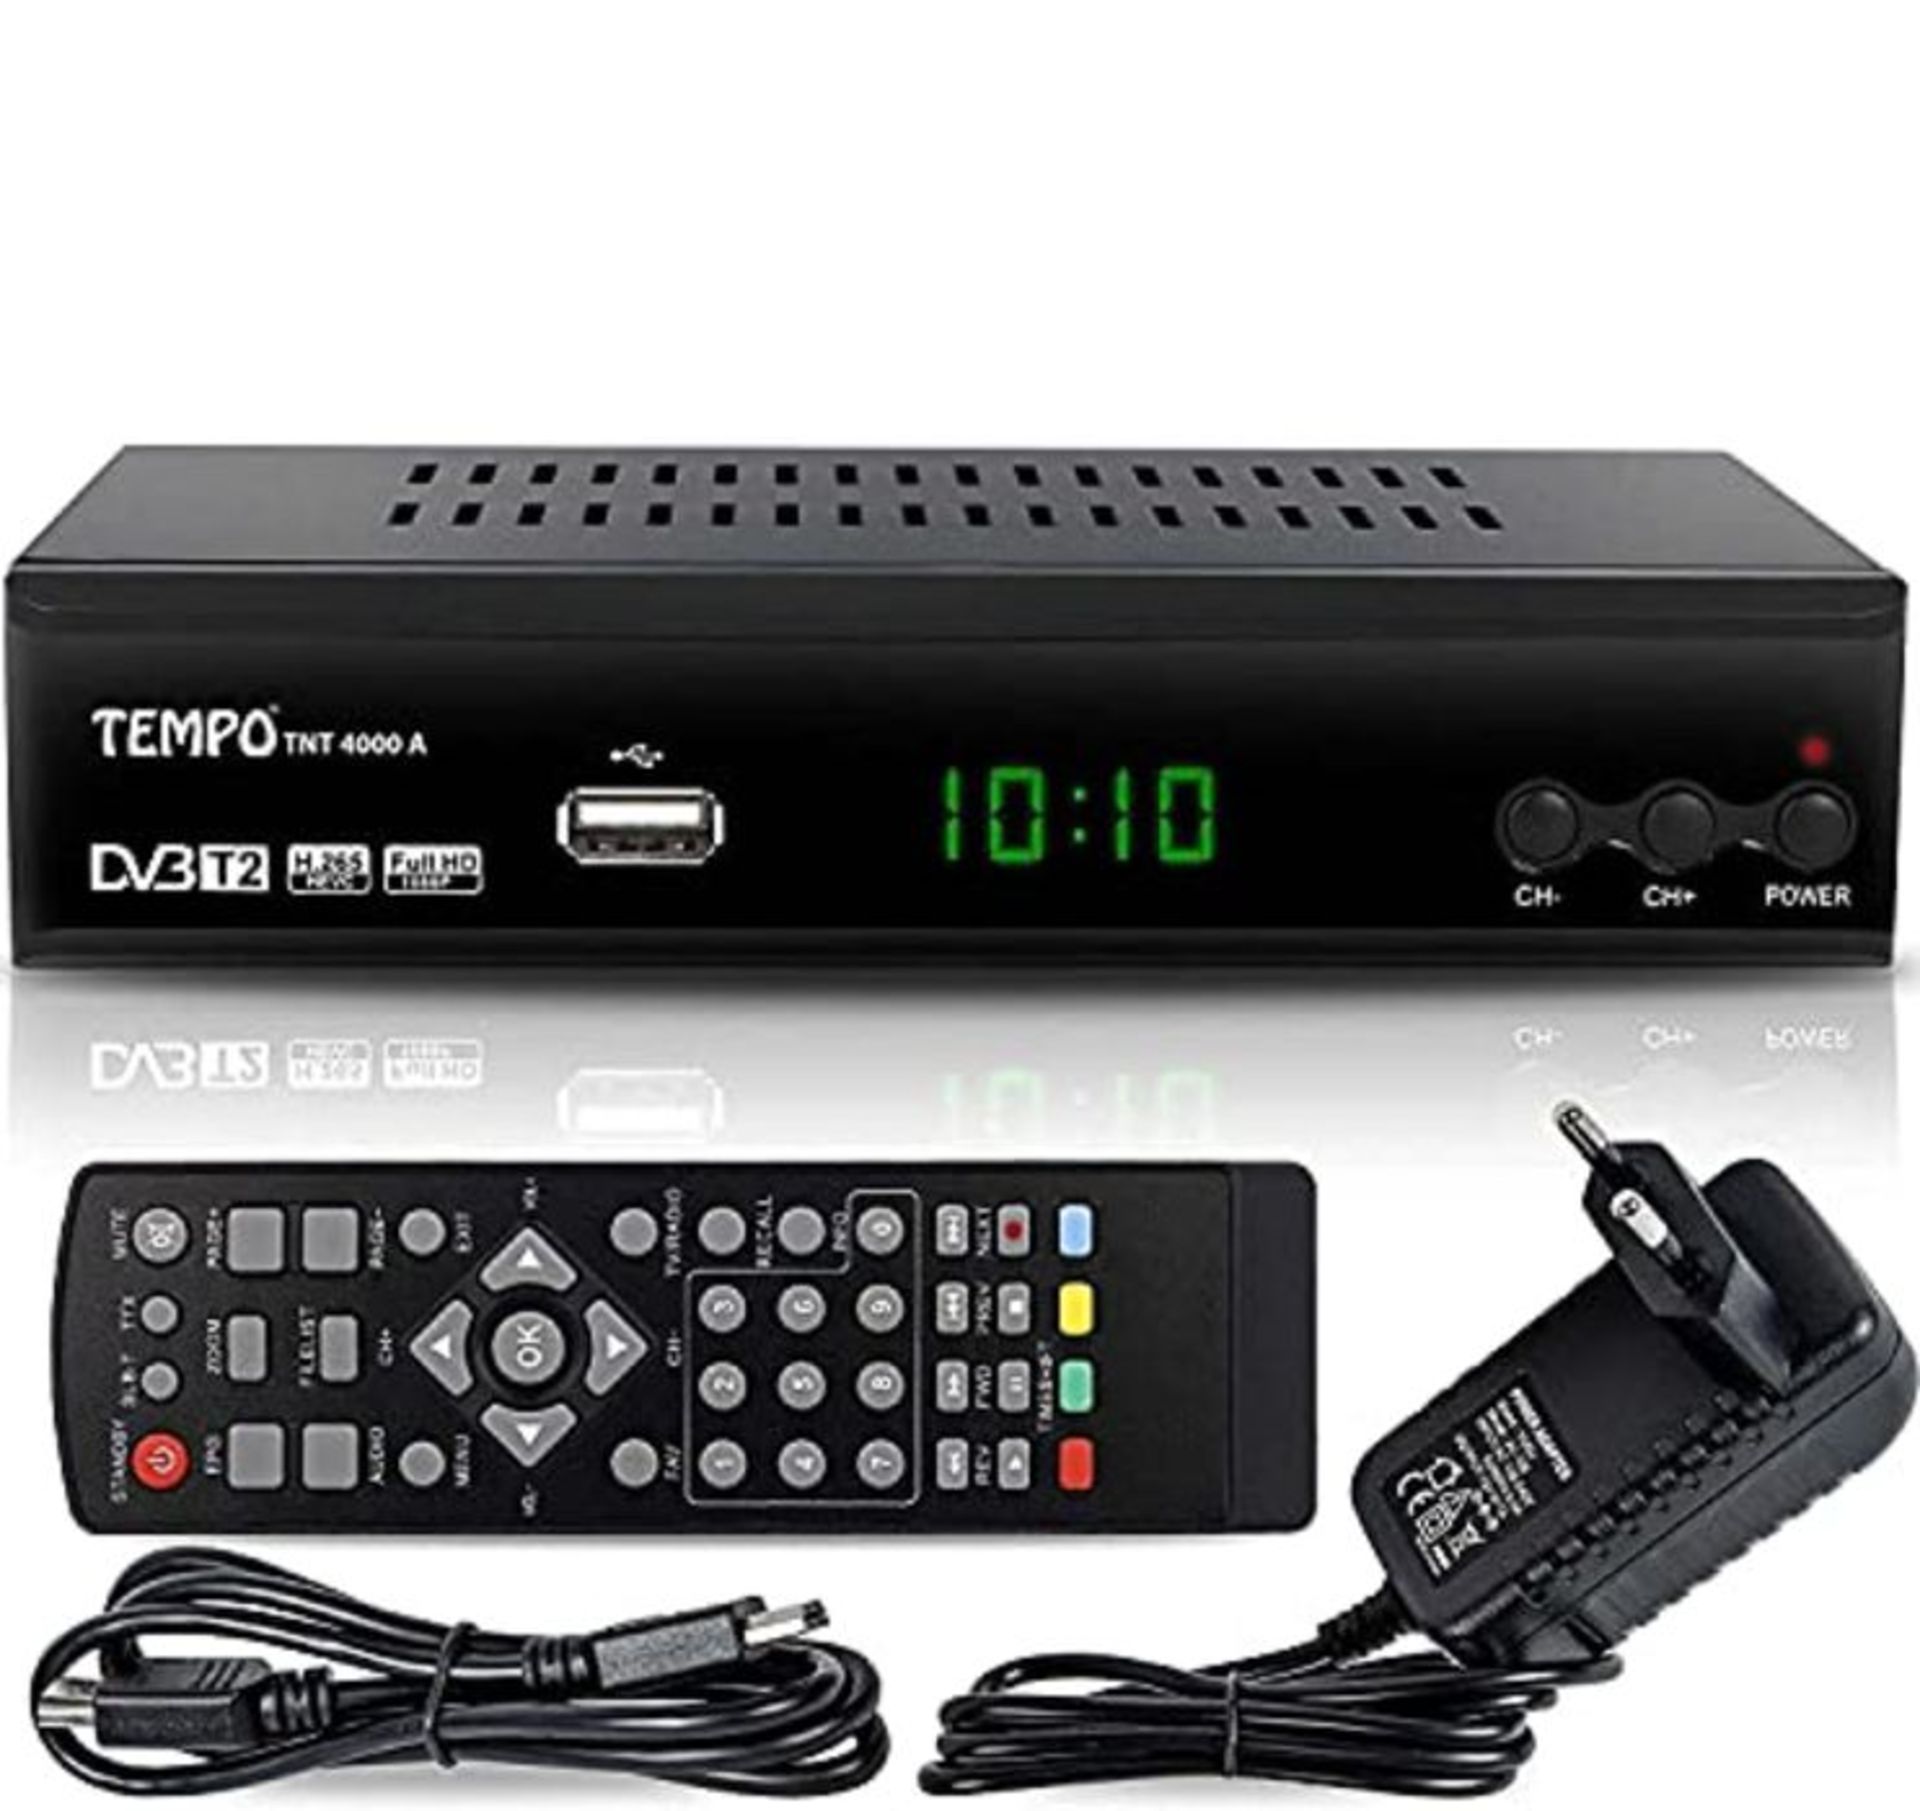 Tempo tmp4000 - Decoder Digitale Terrestre DVB T2 / HD / HDMI / Ricevitore TV / PVR / - Image 4 of 6